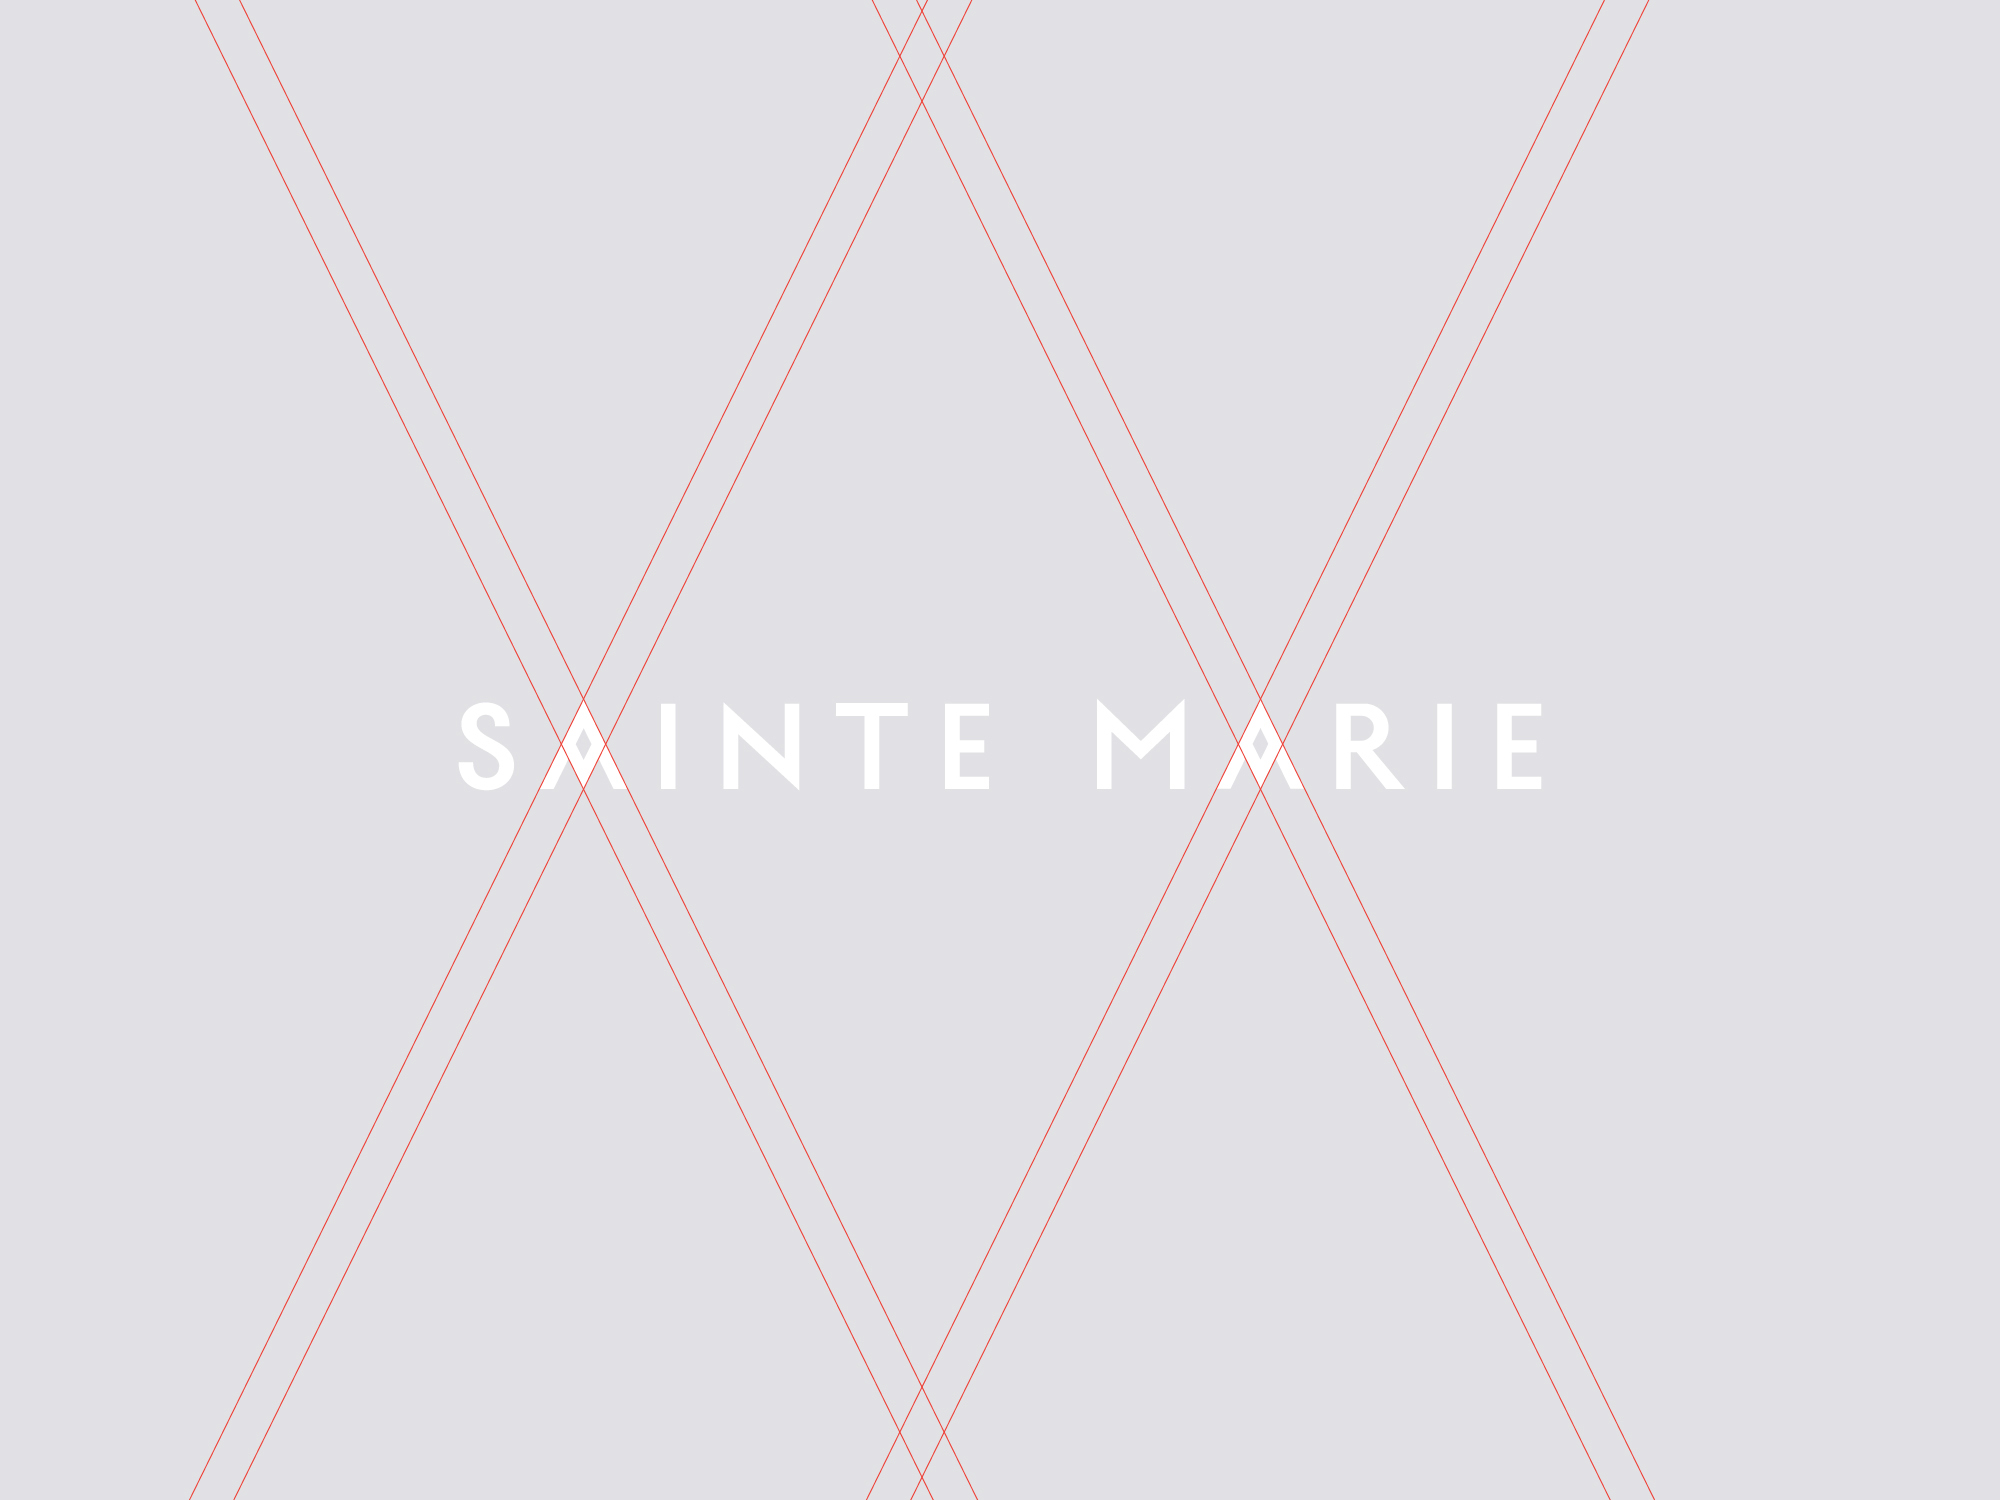 Sainte Marie / La Mamzelle & Co.